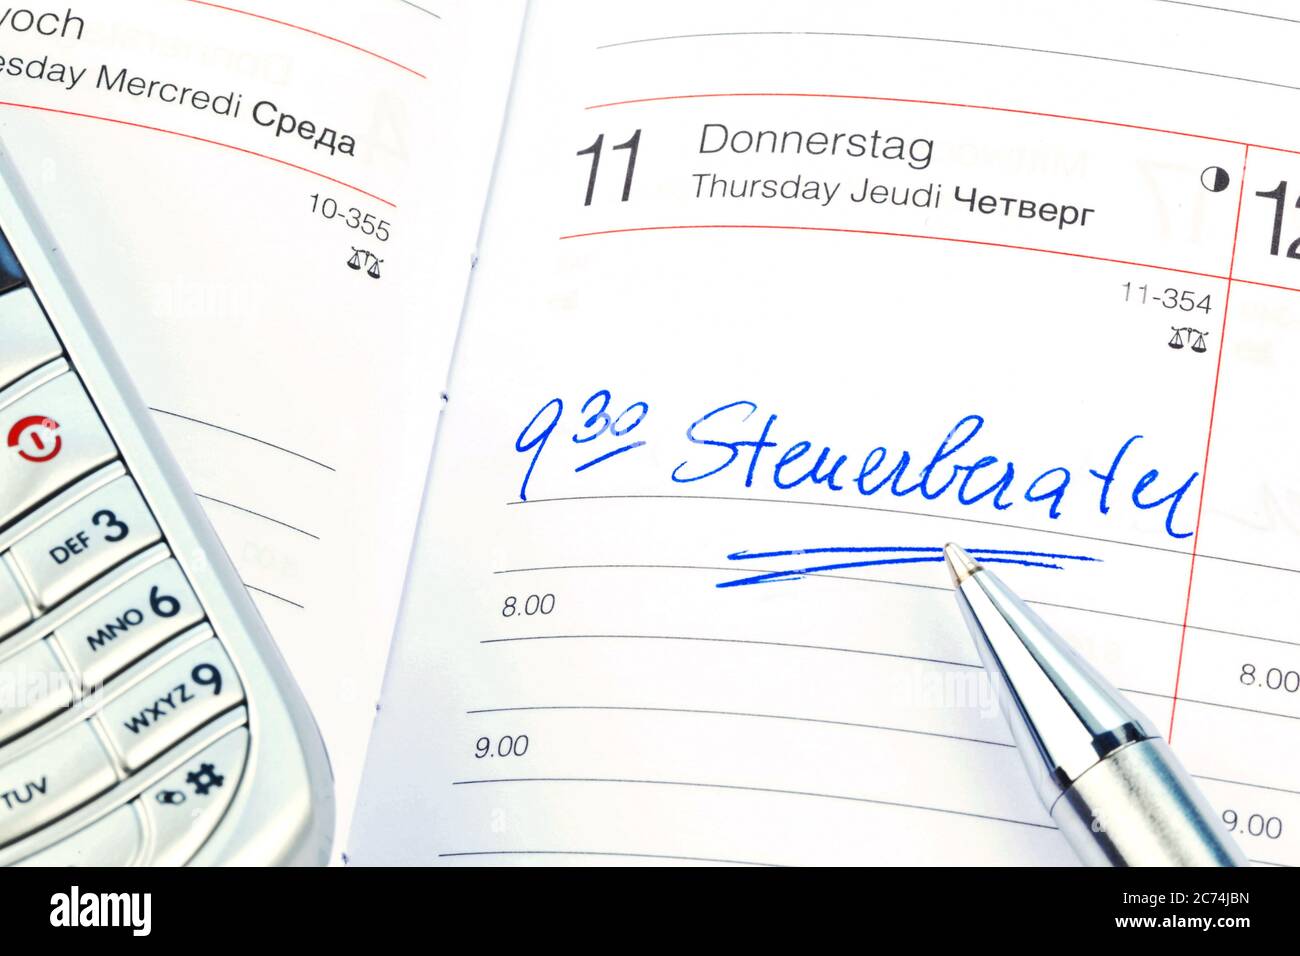 calendar entry tax adviser, Germany Stock Photo